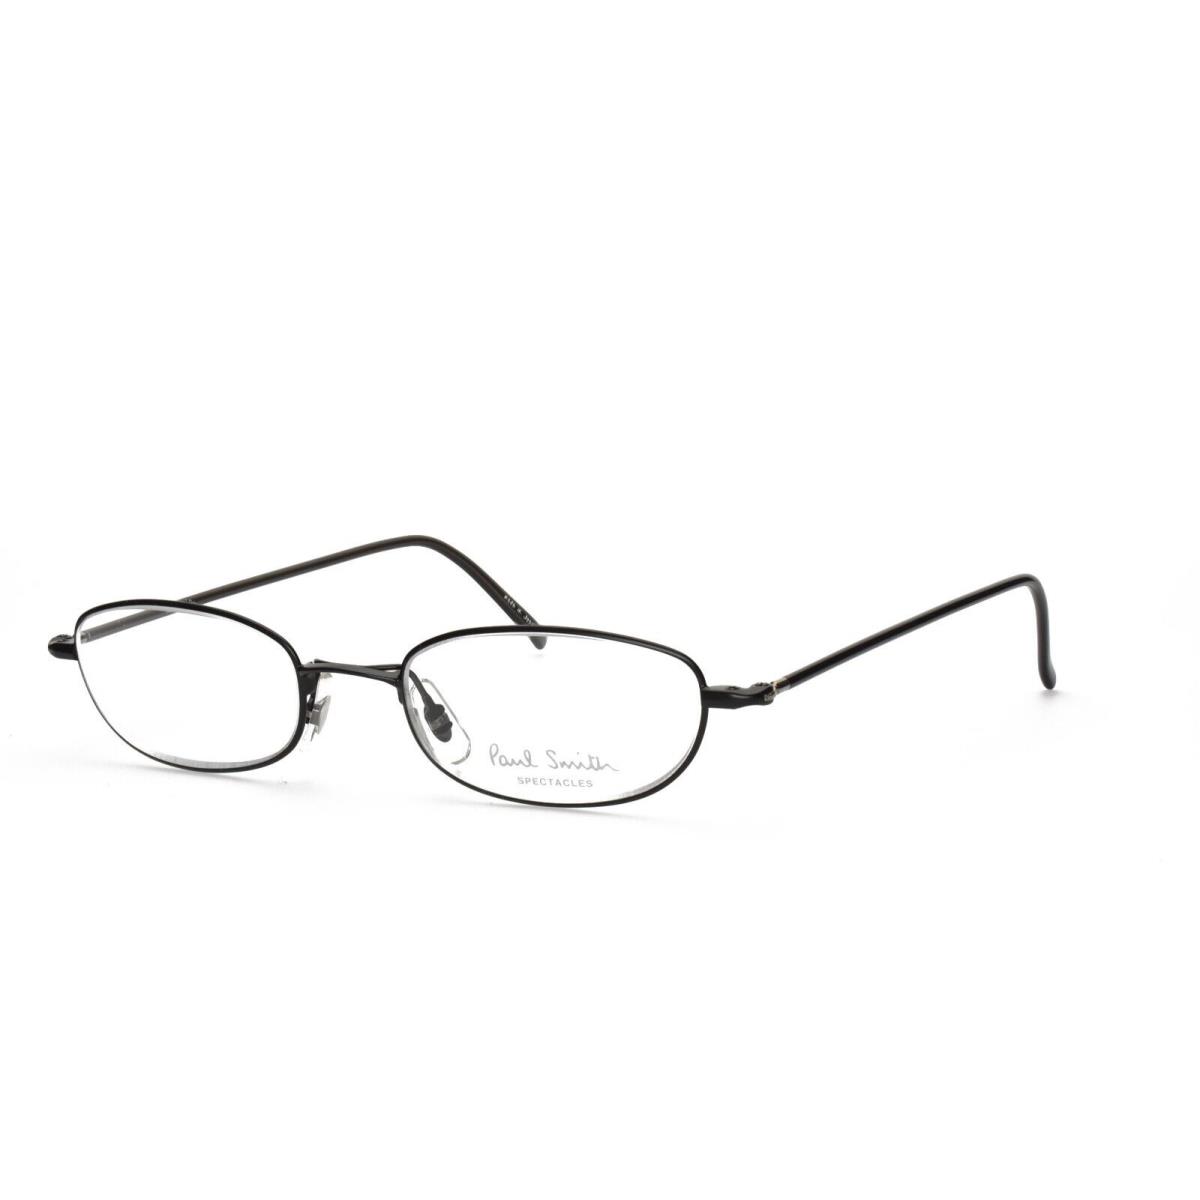 Paul Smith 140 OX 47-18-145 Black Vtg Vintage Eyeglasses Frames